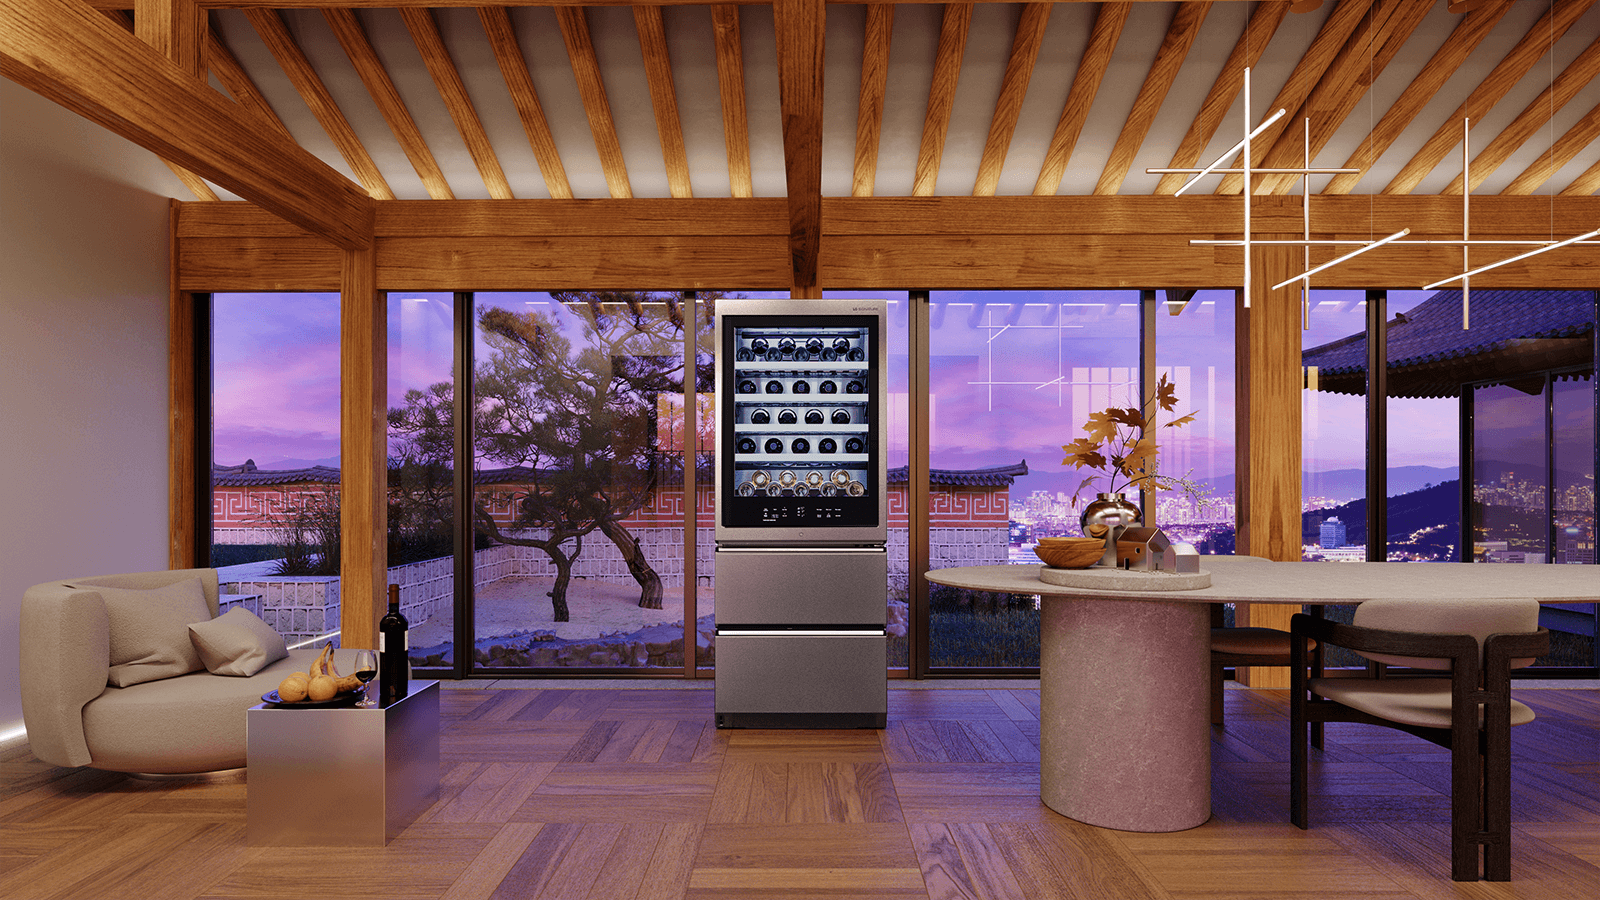 LG Signature wine cellar in a 3D Virtual Space